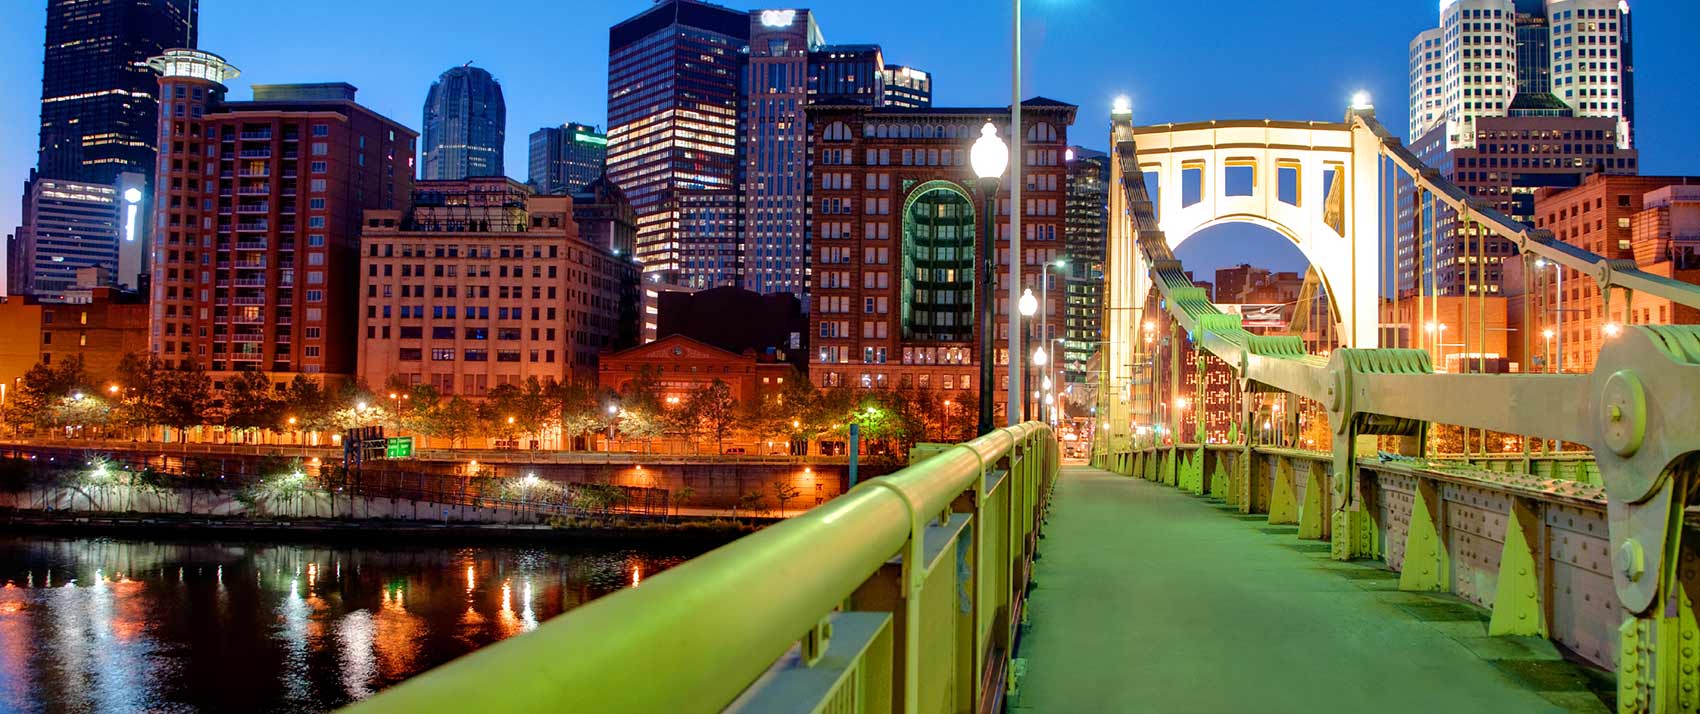 bridge into Pittsburgh, pa